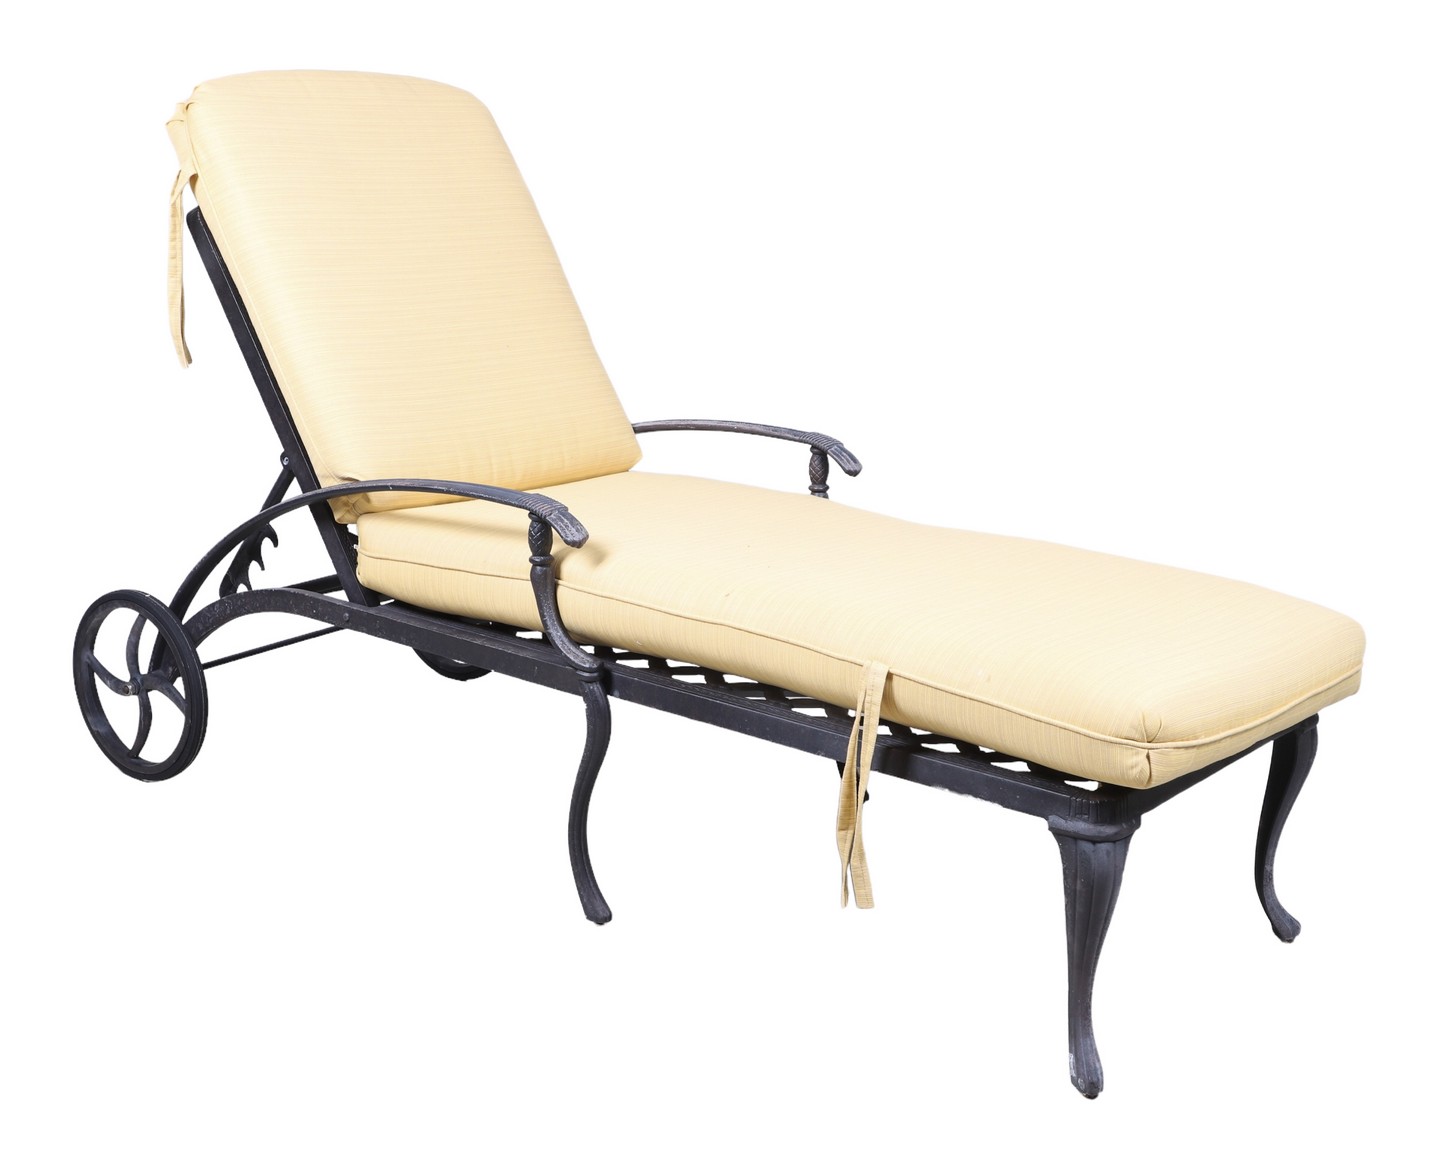 Contemporary metal chaise lounge  2e059b